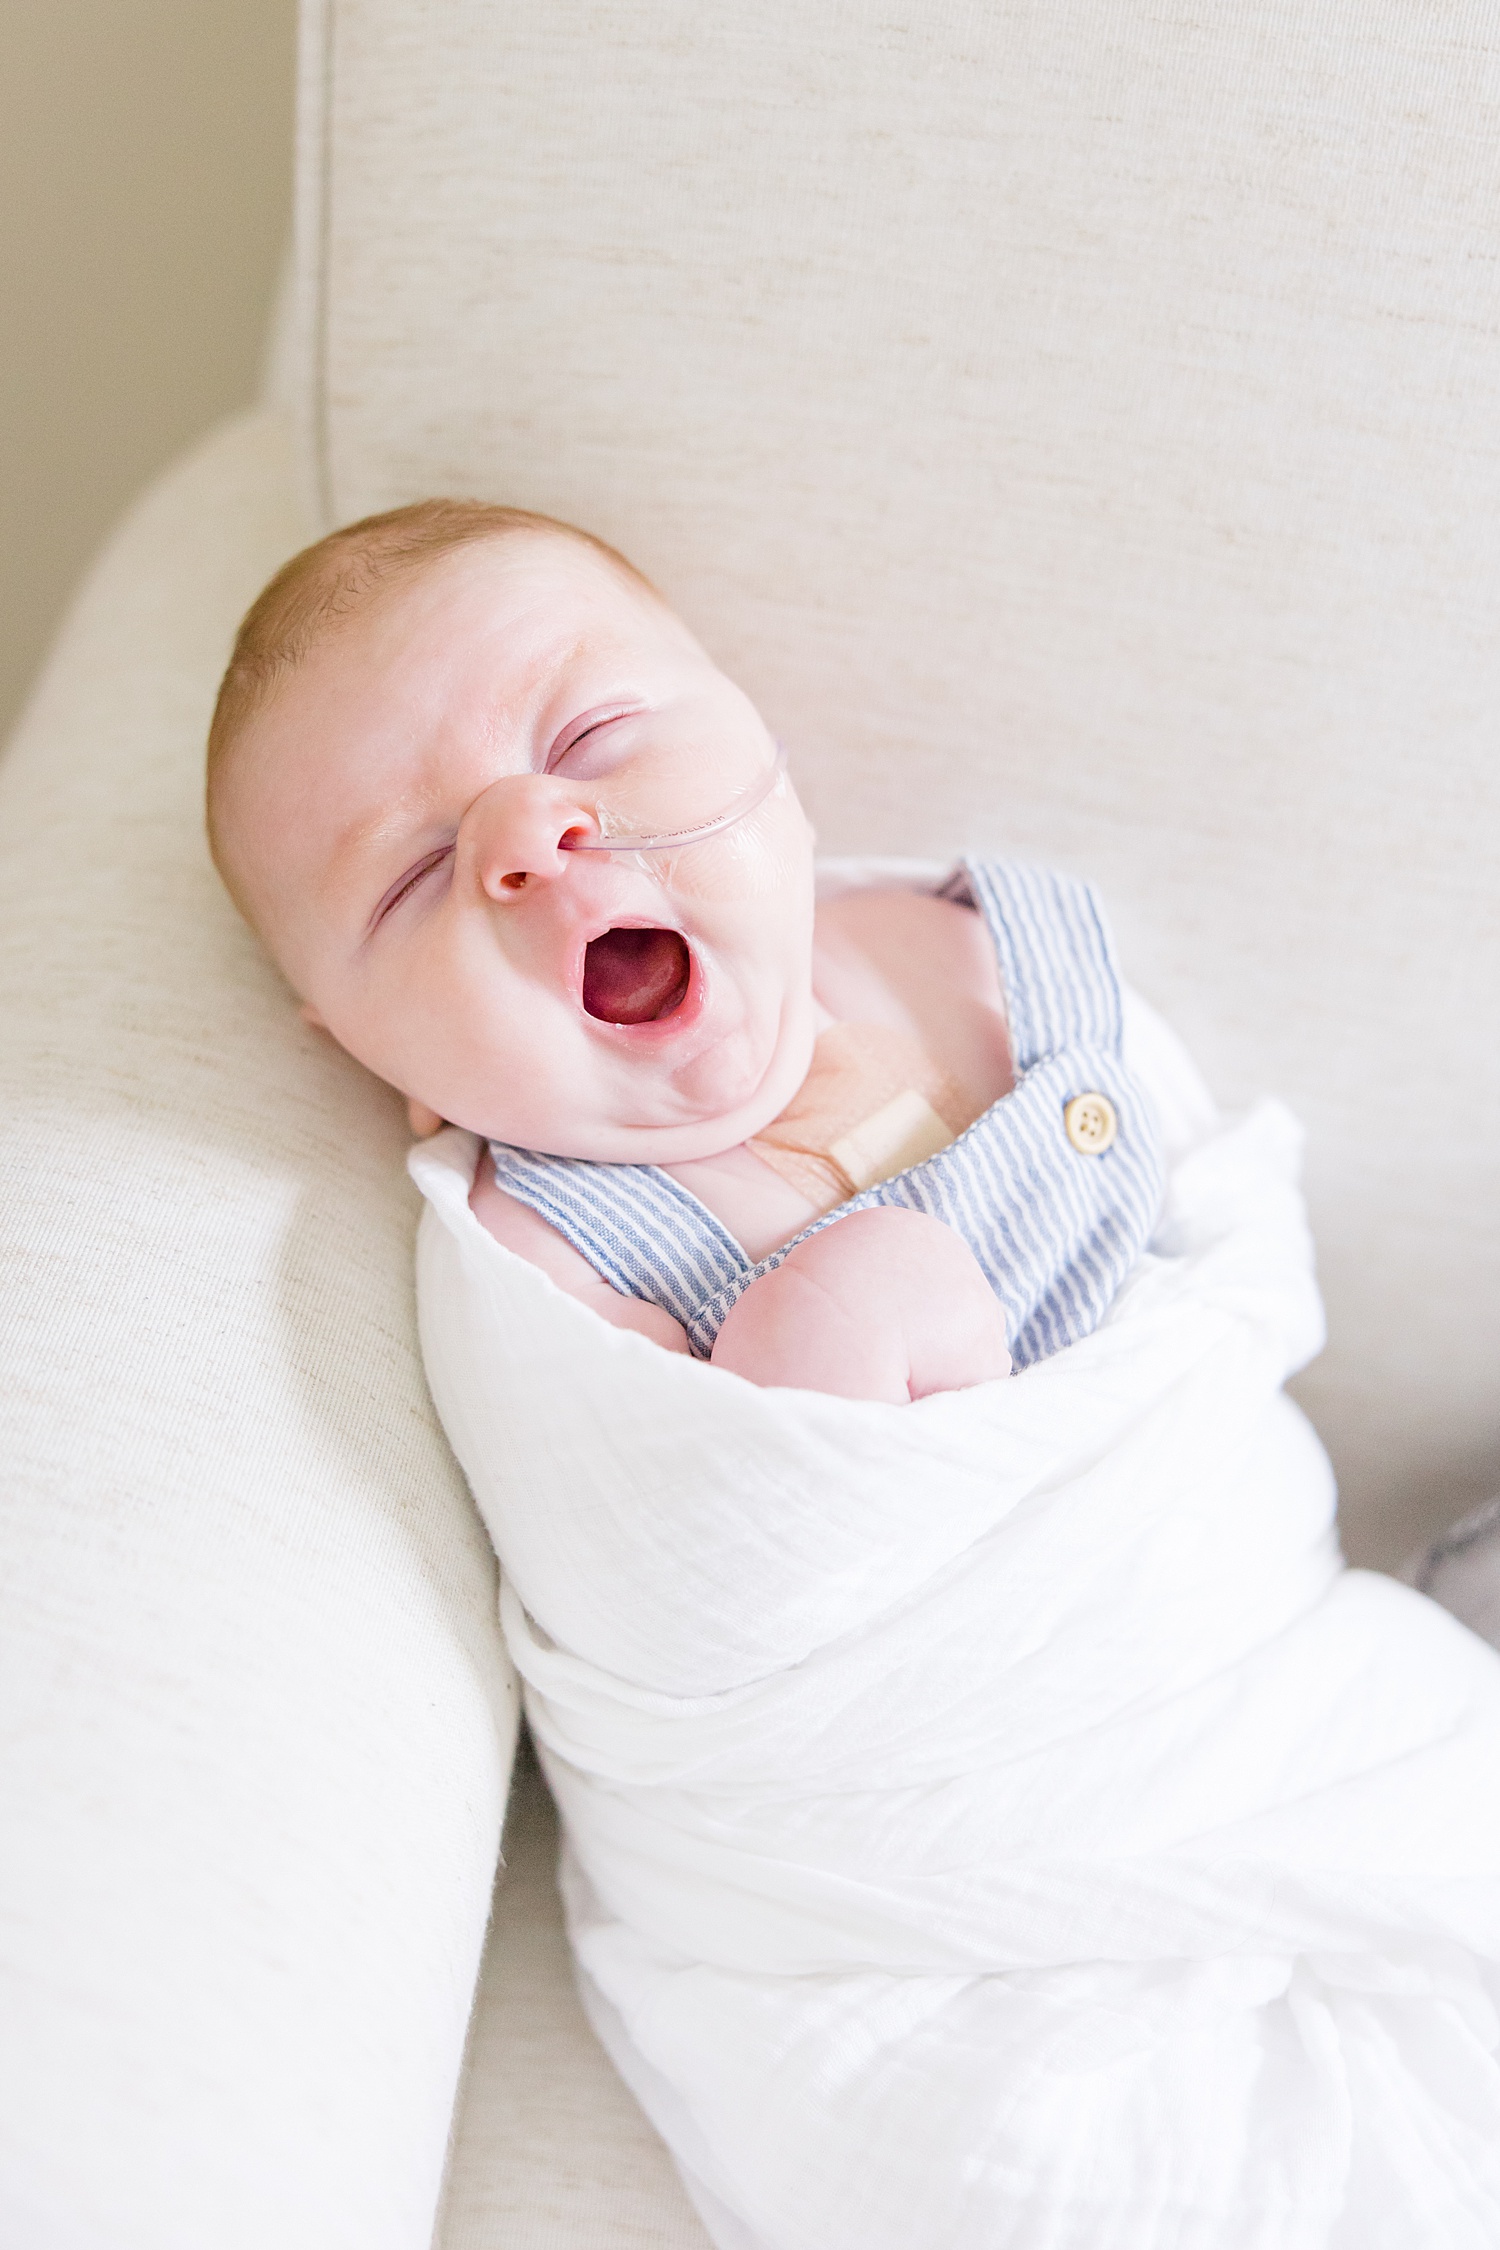 baby boy yawns in his sleep during in-home newborn session in Birmingham AL 